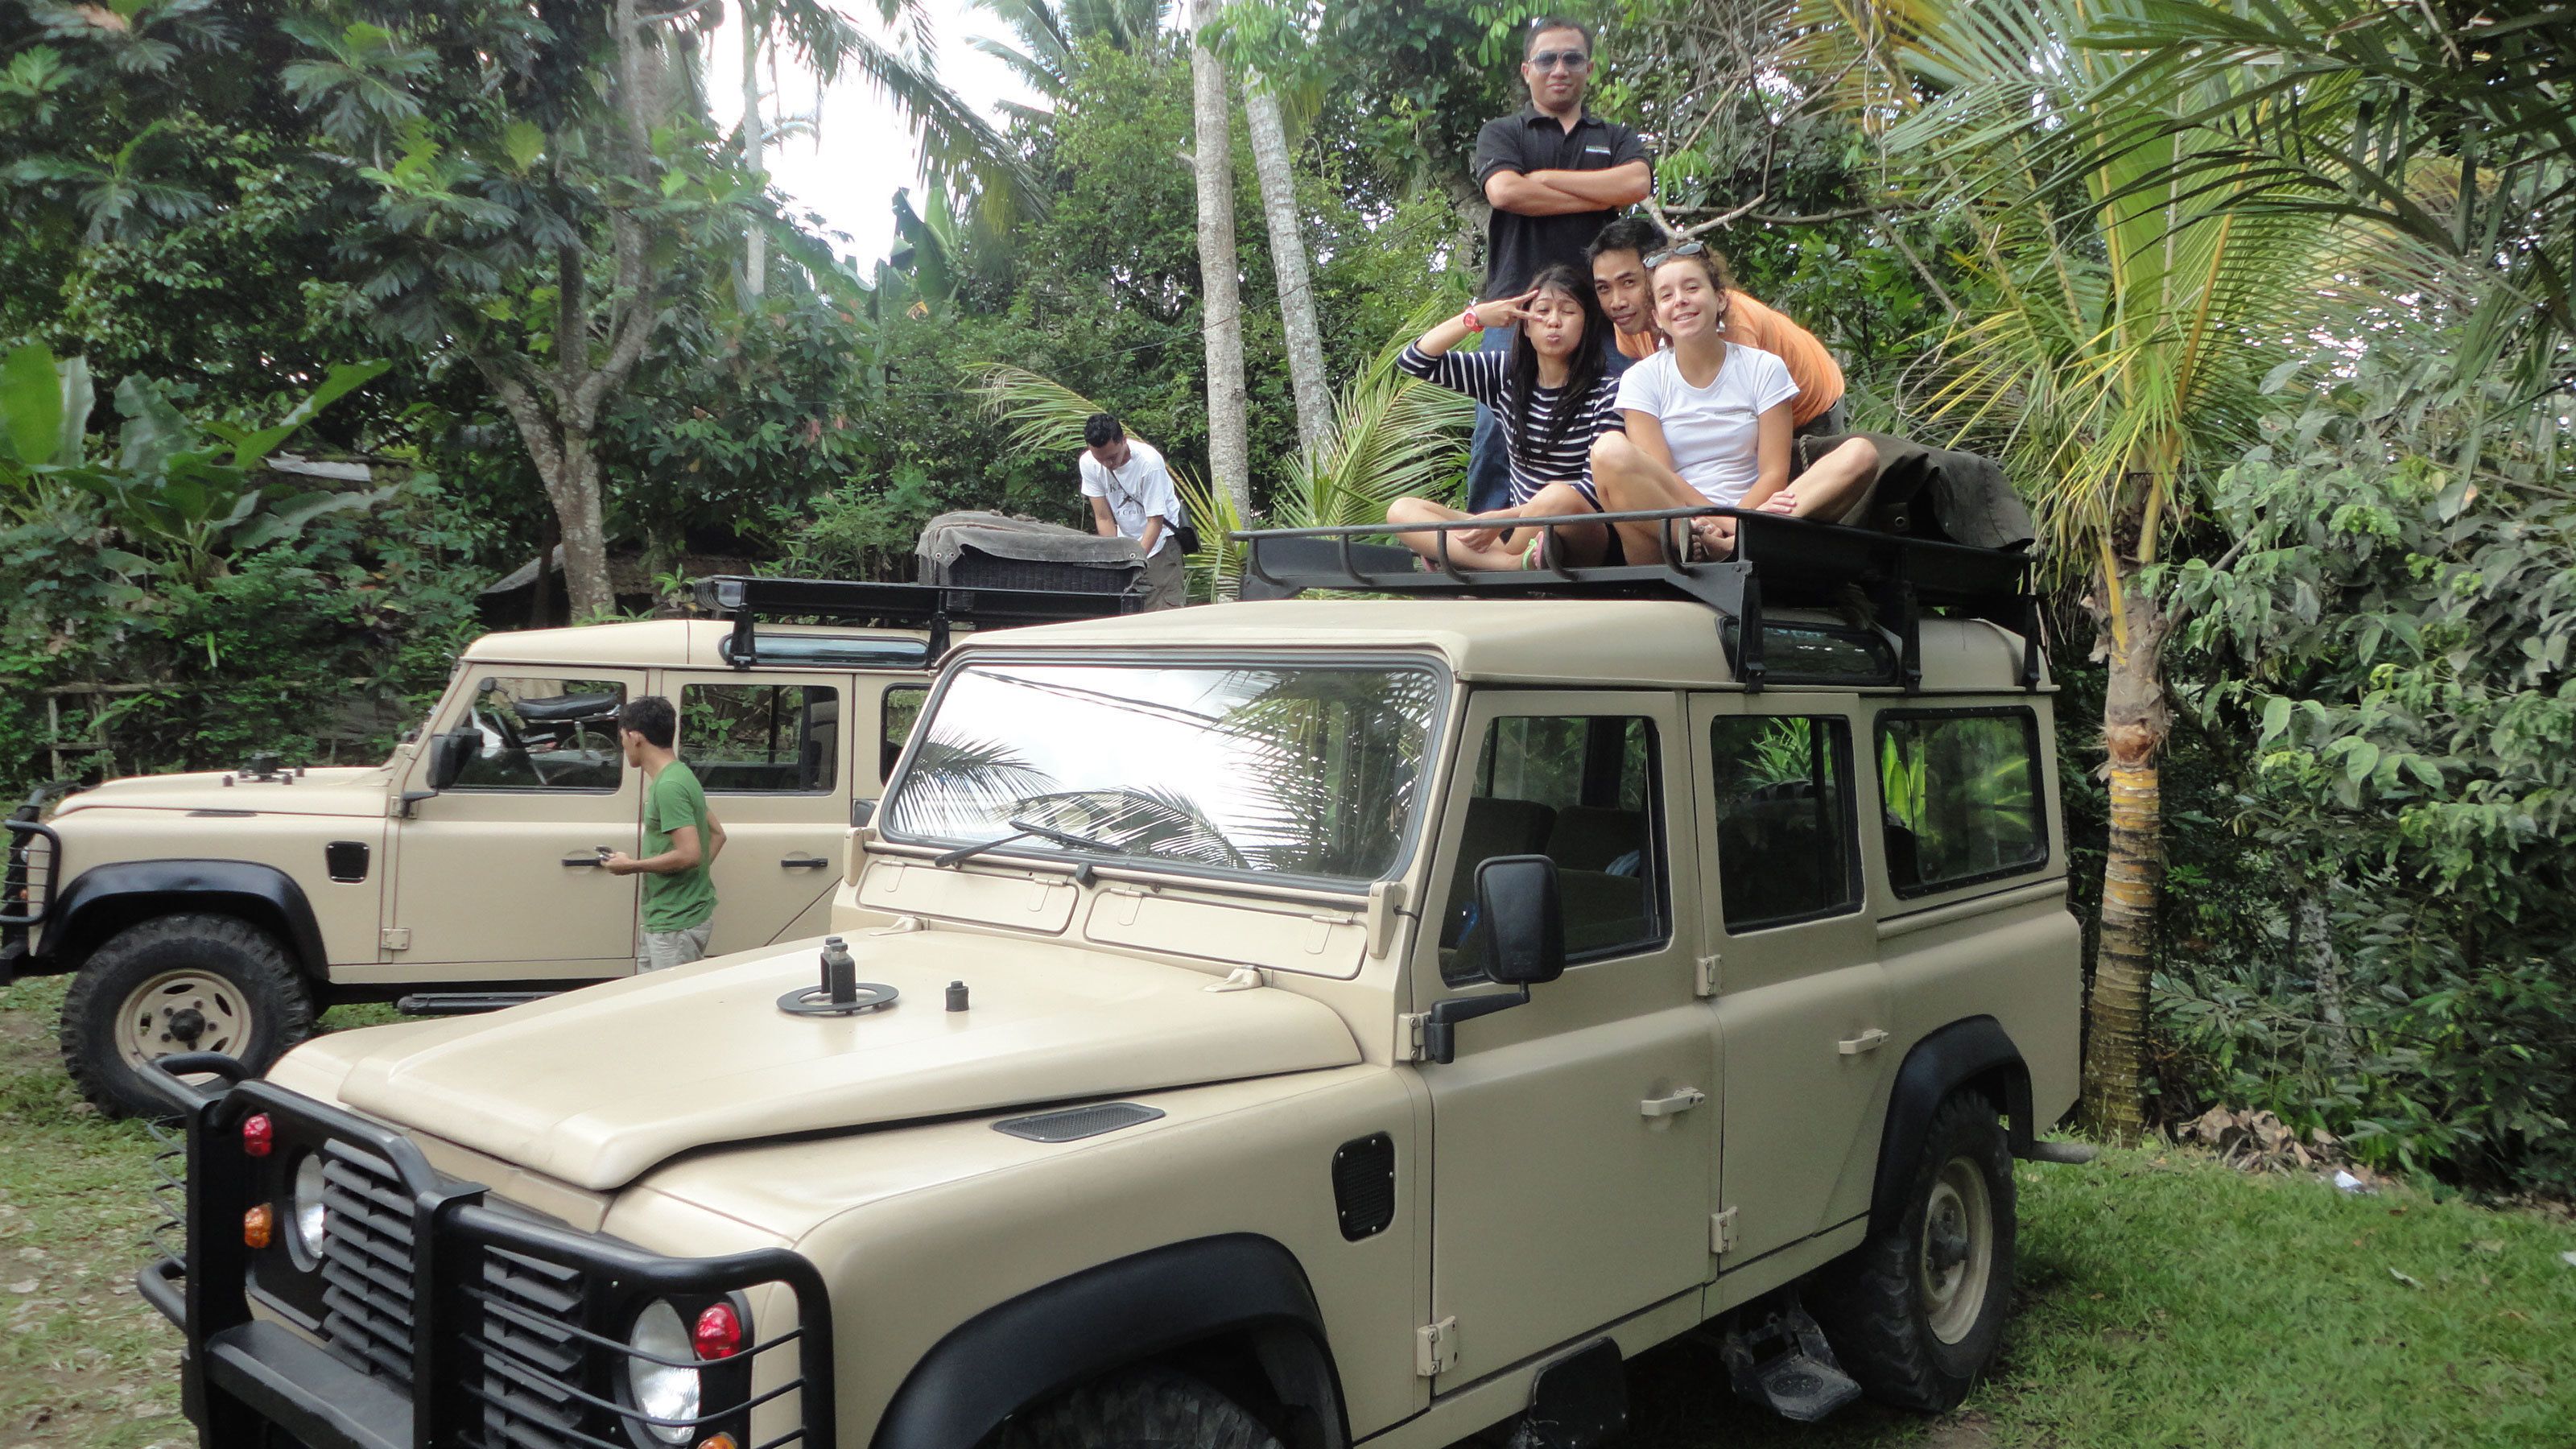  4x4  Adventure Full Day Tour of Bali 